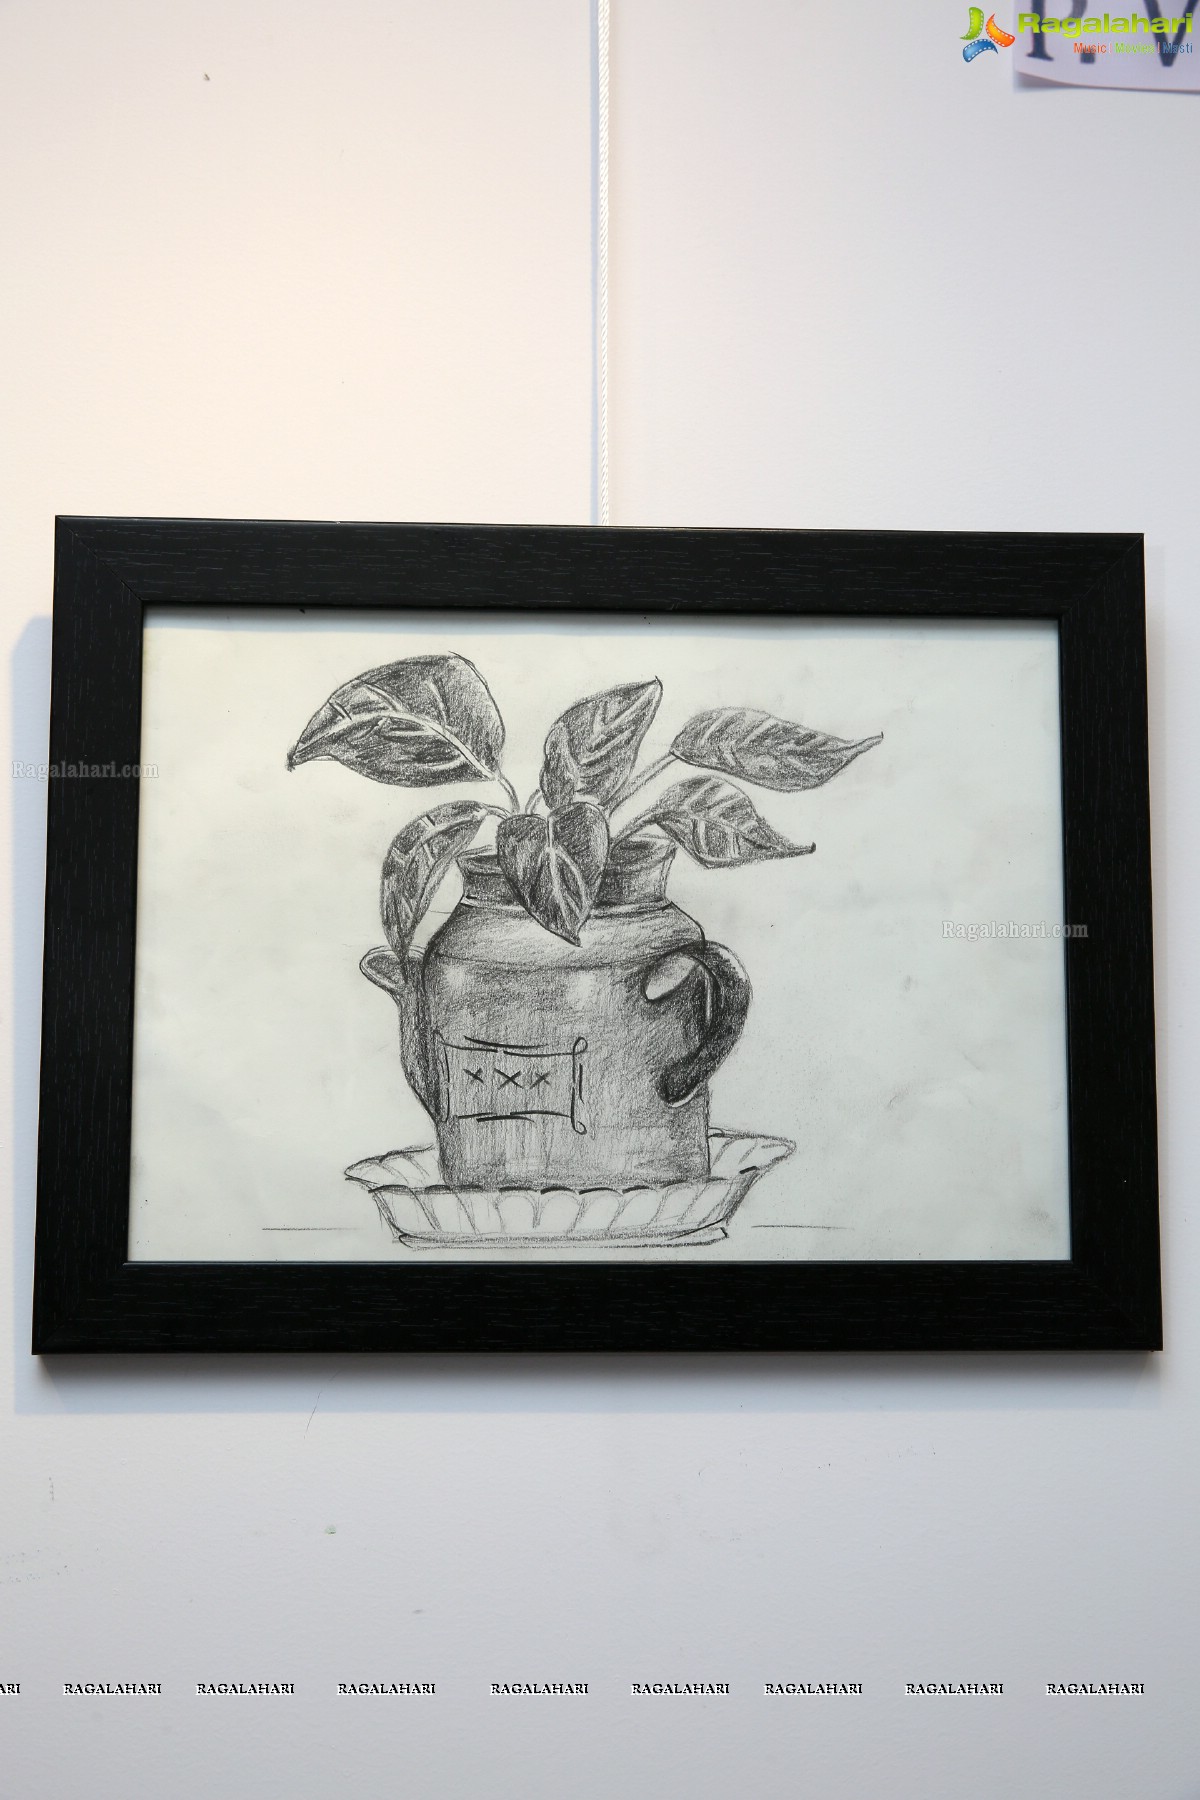 Blooming Buds - An Exhibition of Drawings & Paintings at Pegasus Art Gallery